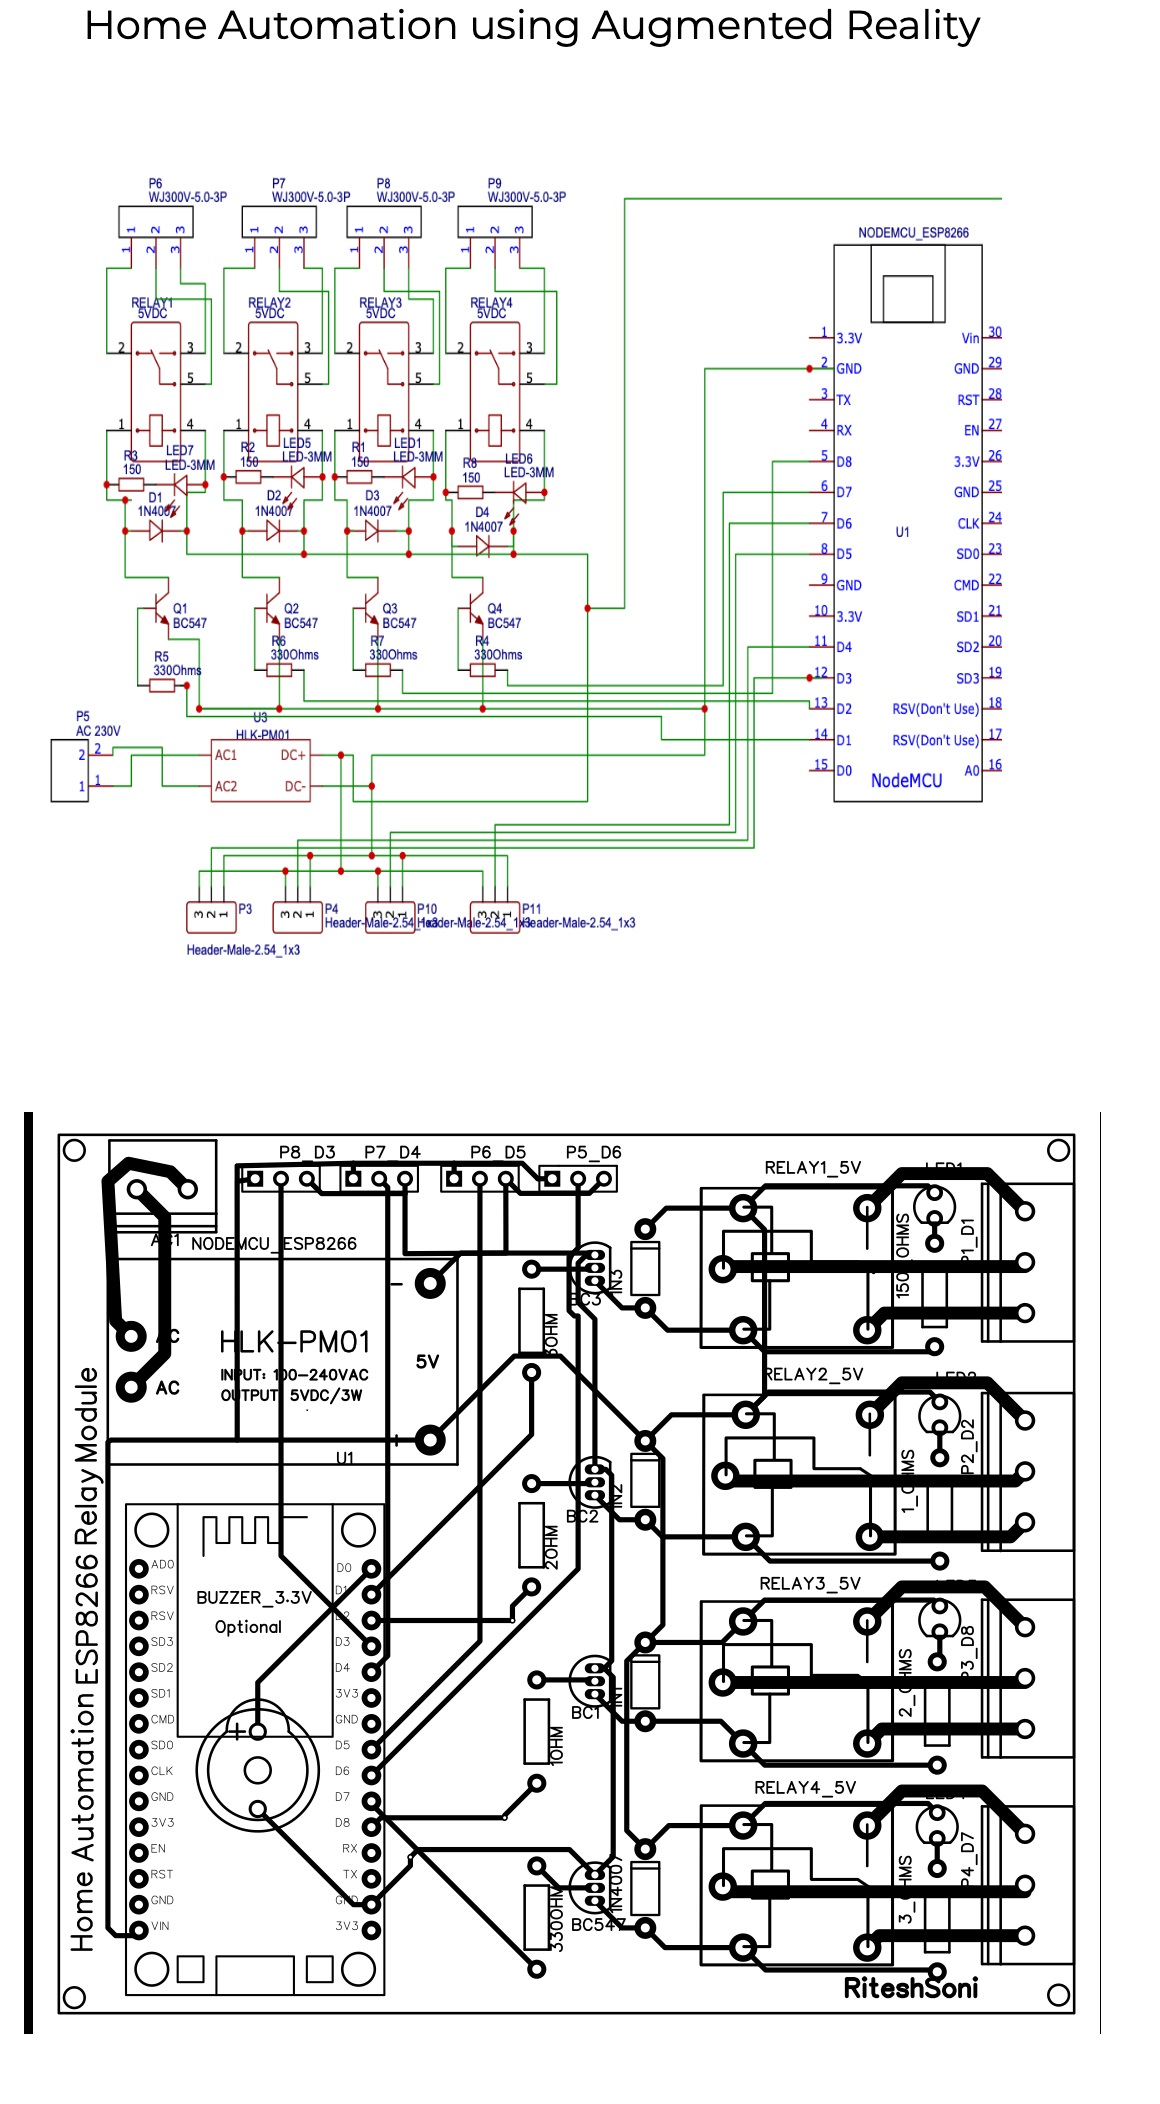 Home automation Circuit Diagram